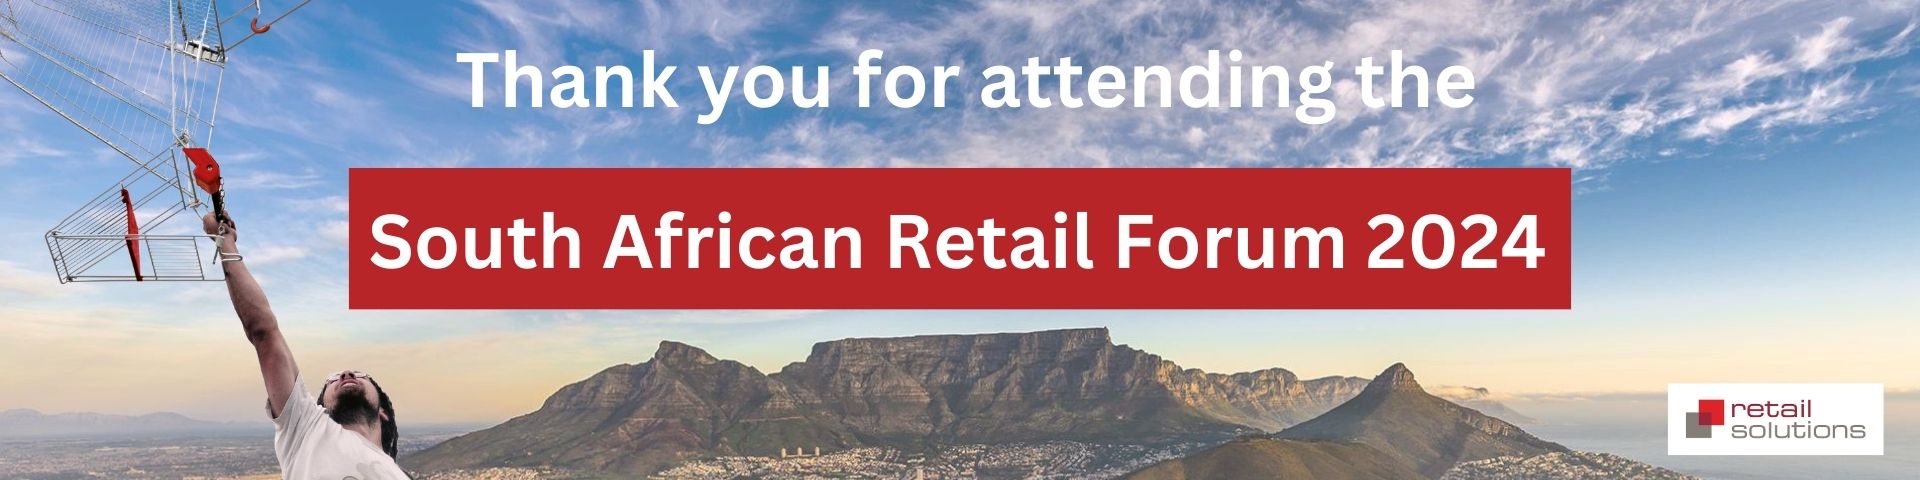 Start_Slider_Thank_you_Retail_Forum_South_Africa